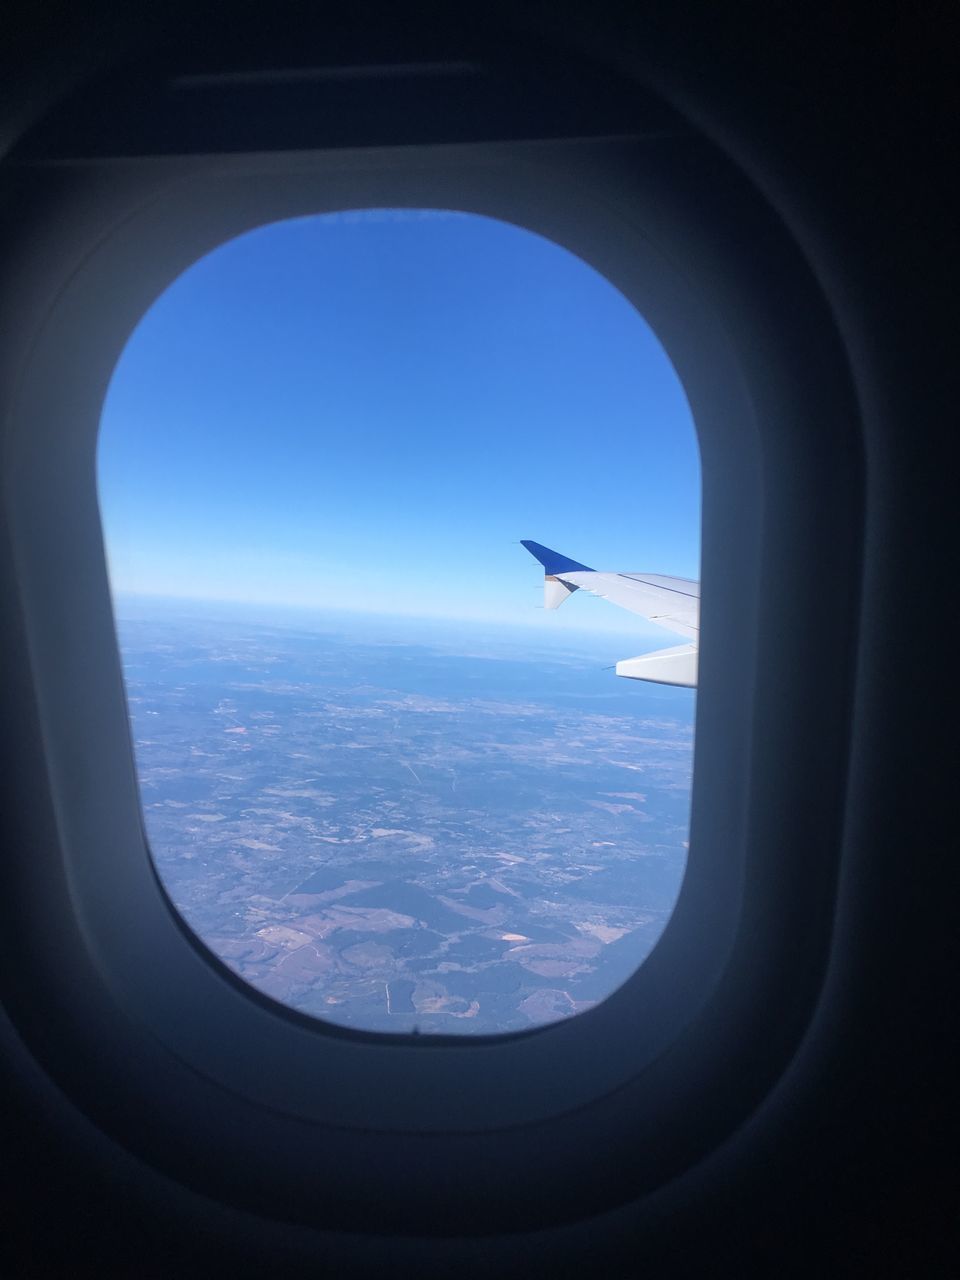 AIRPLANE FLYING OVER SEA SEEN THROUGH WINDOW